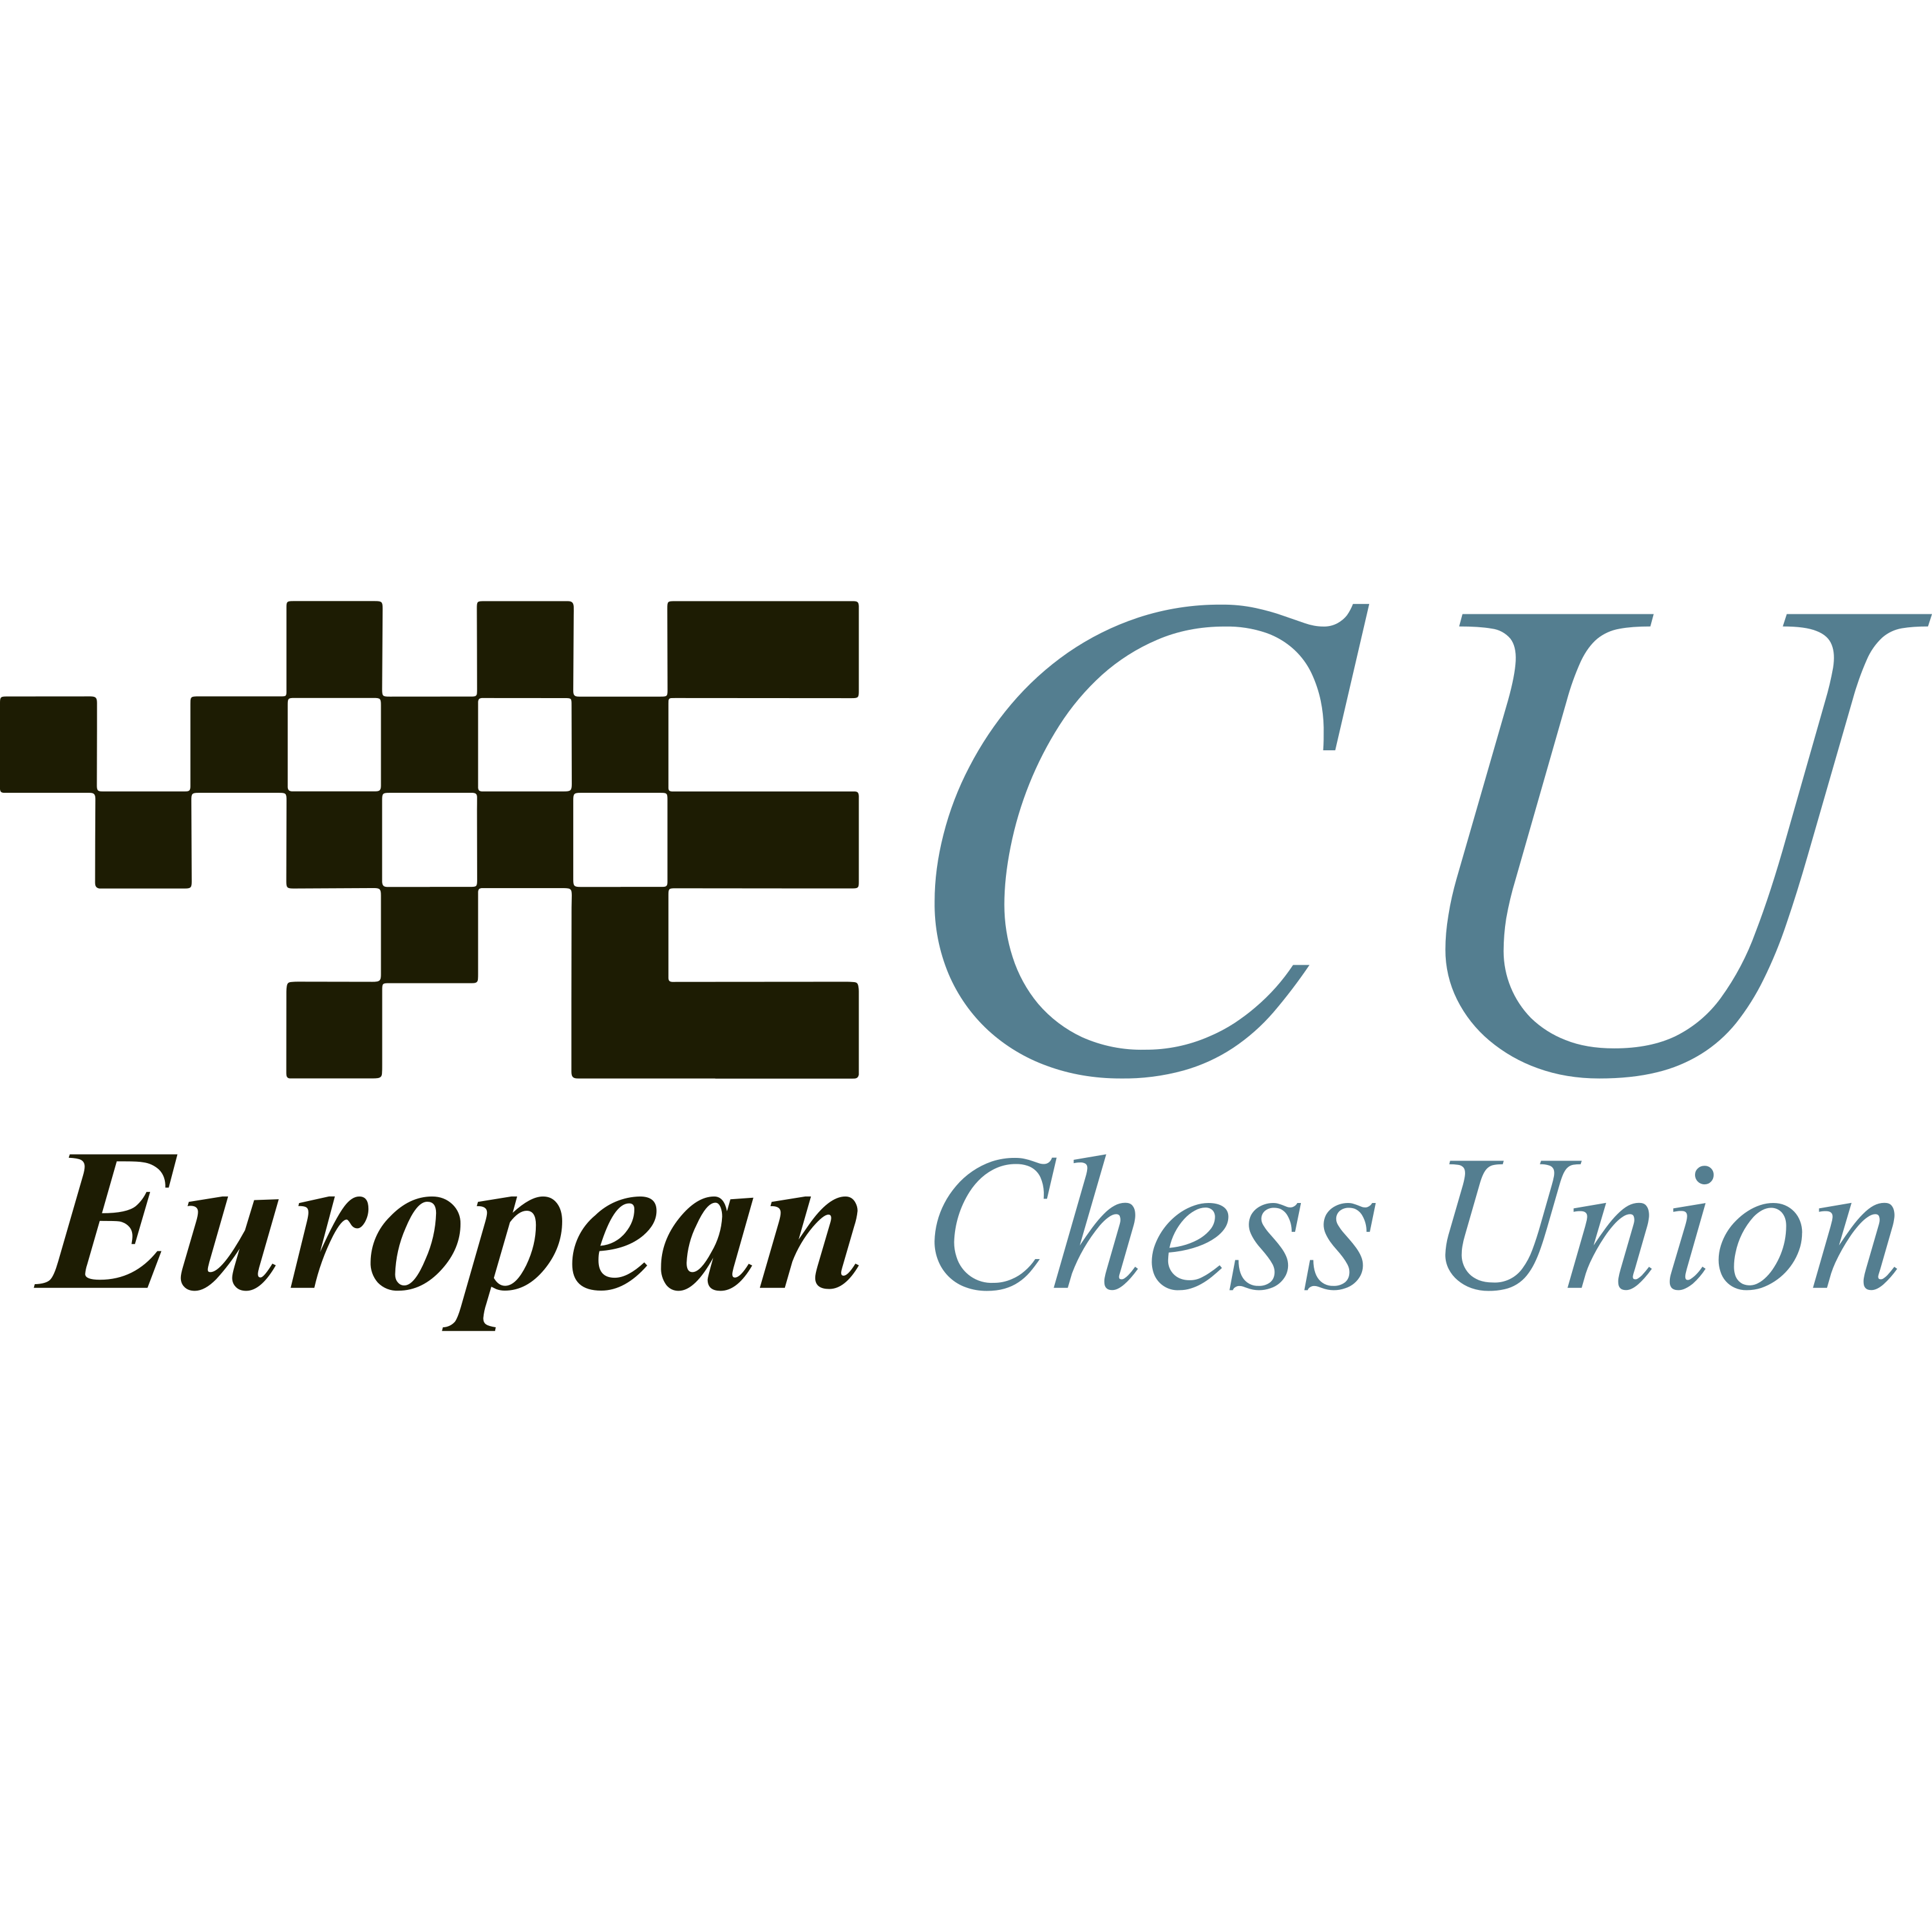 European Chess Union Logo Transparent Picture